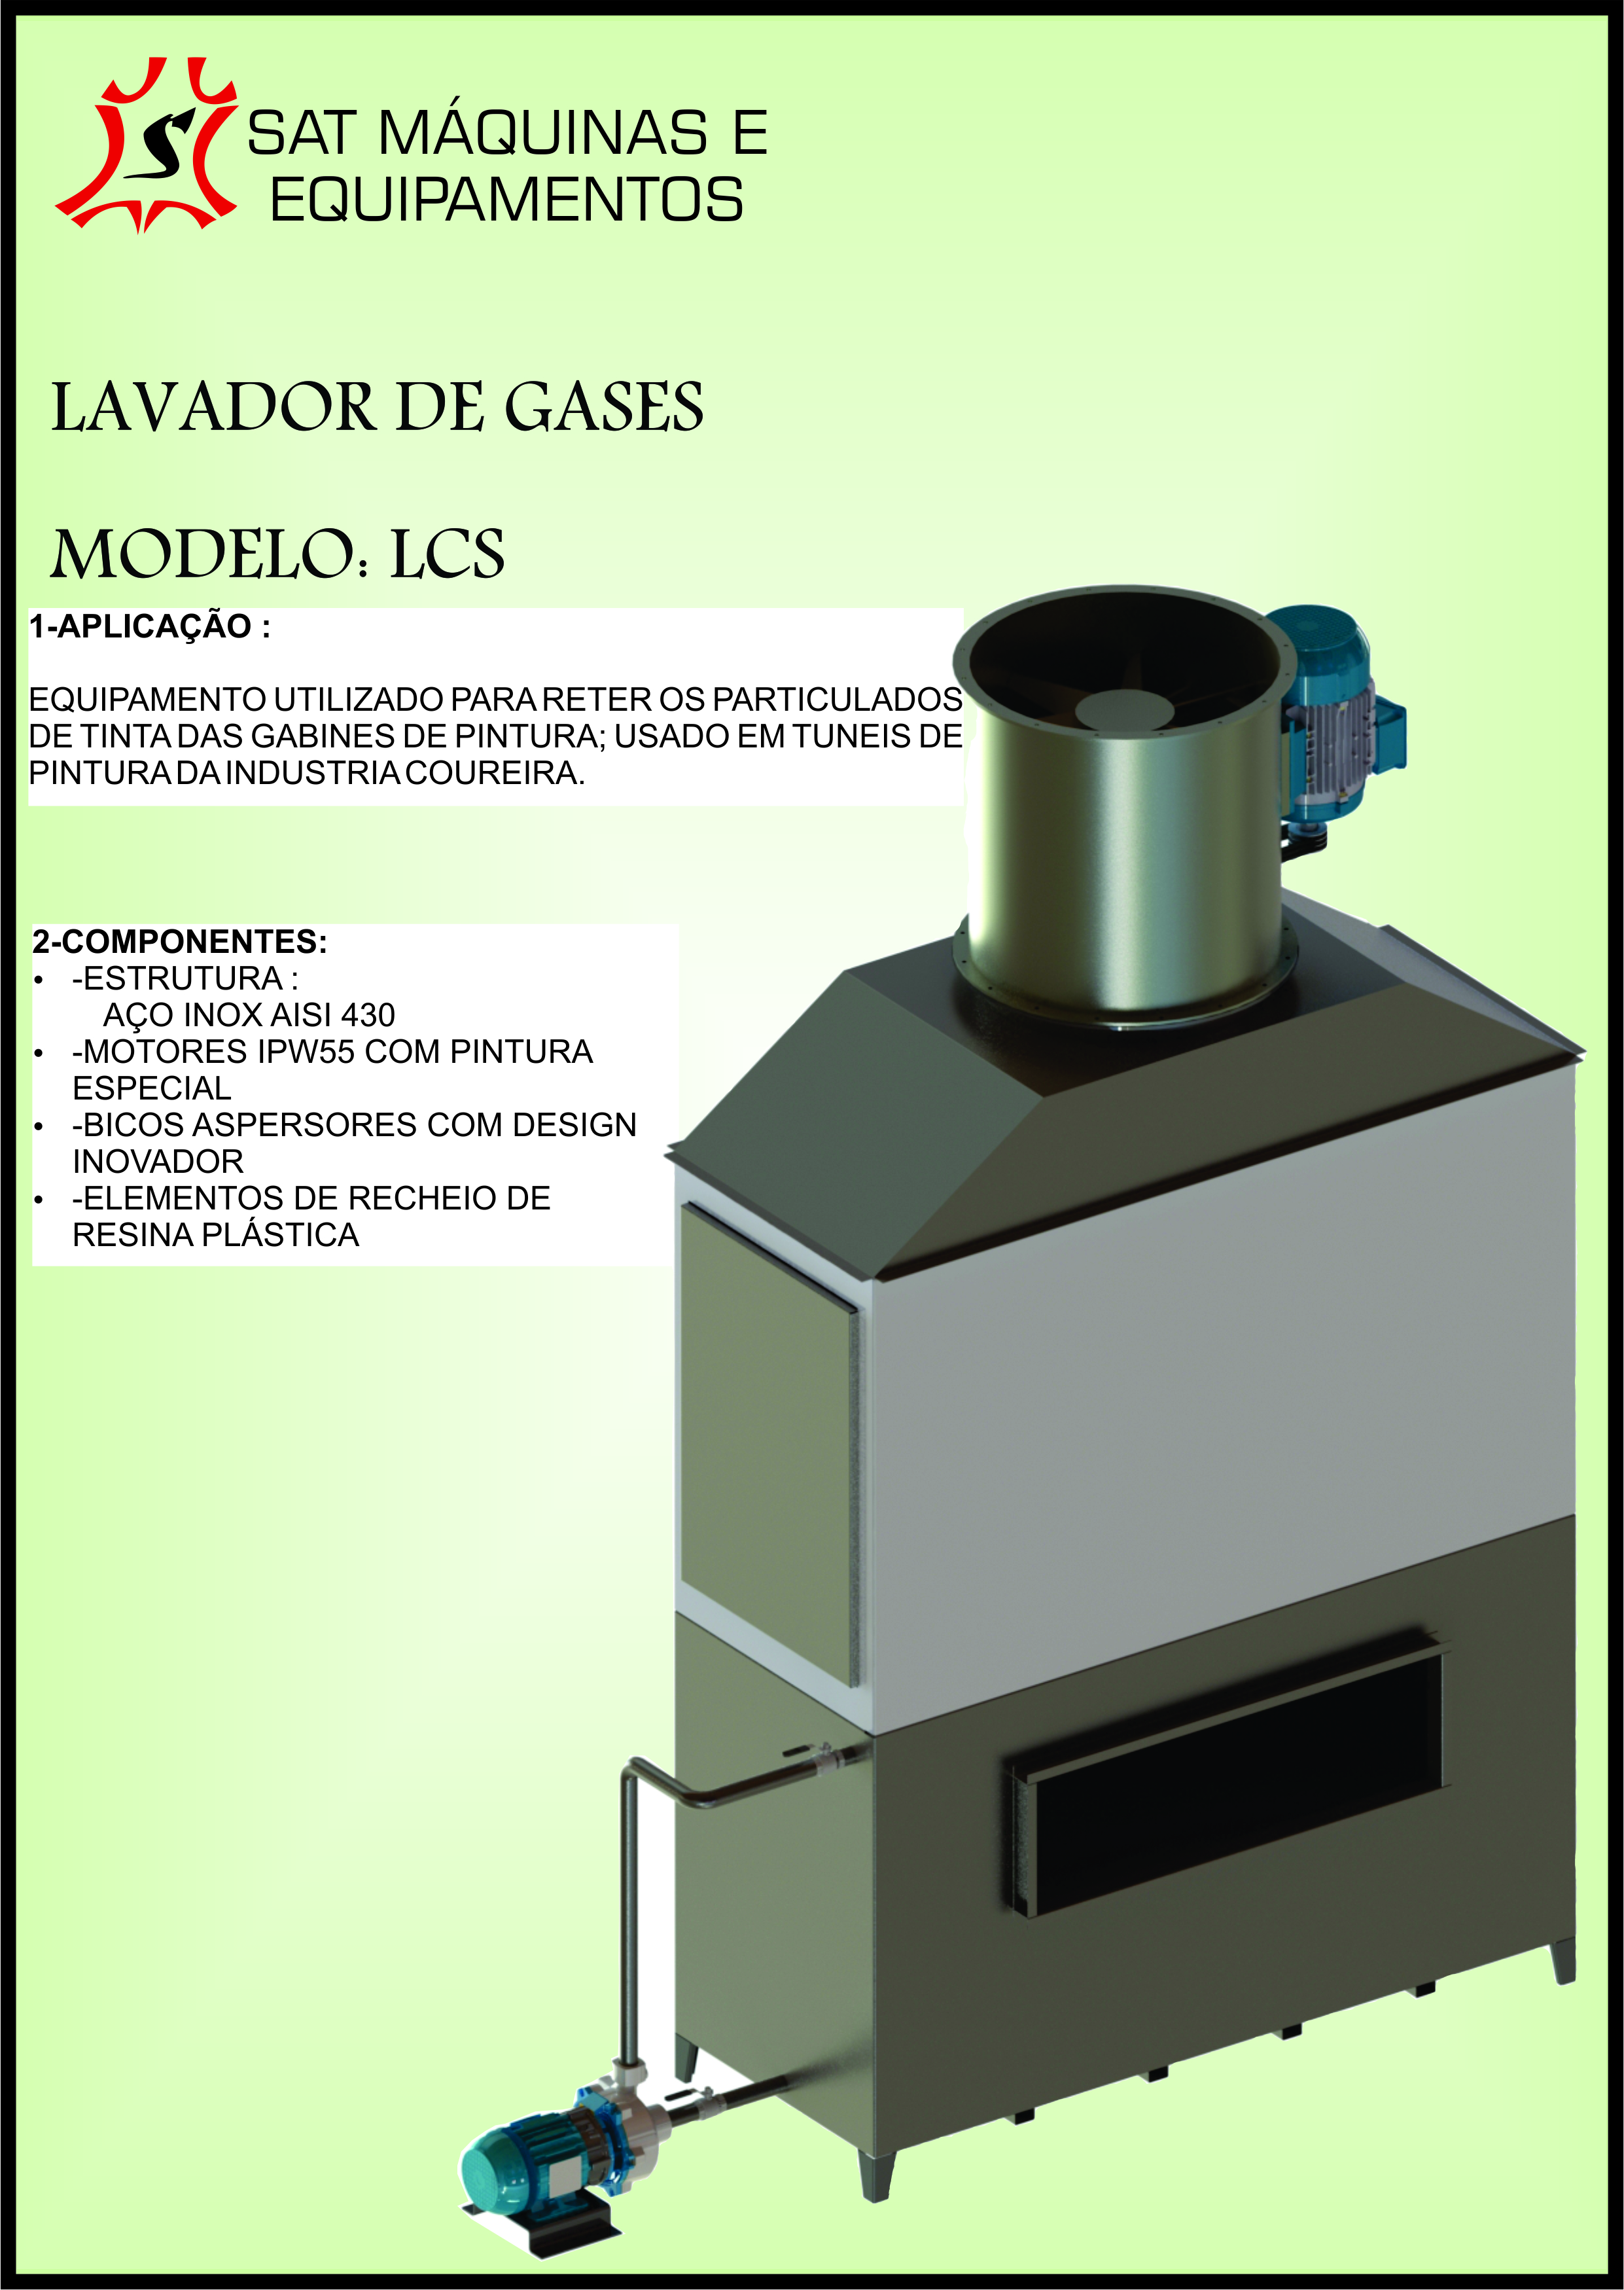 LAVADOR DE GASES - MODELO: LCS